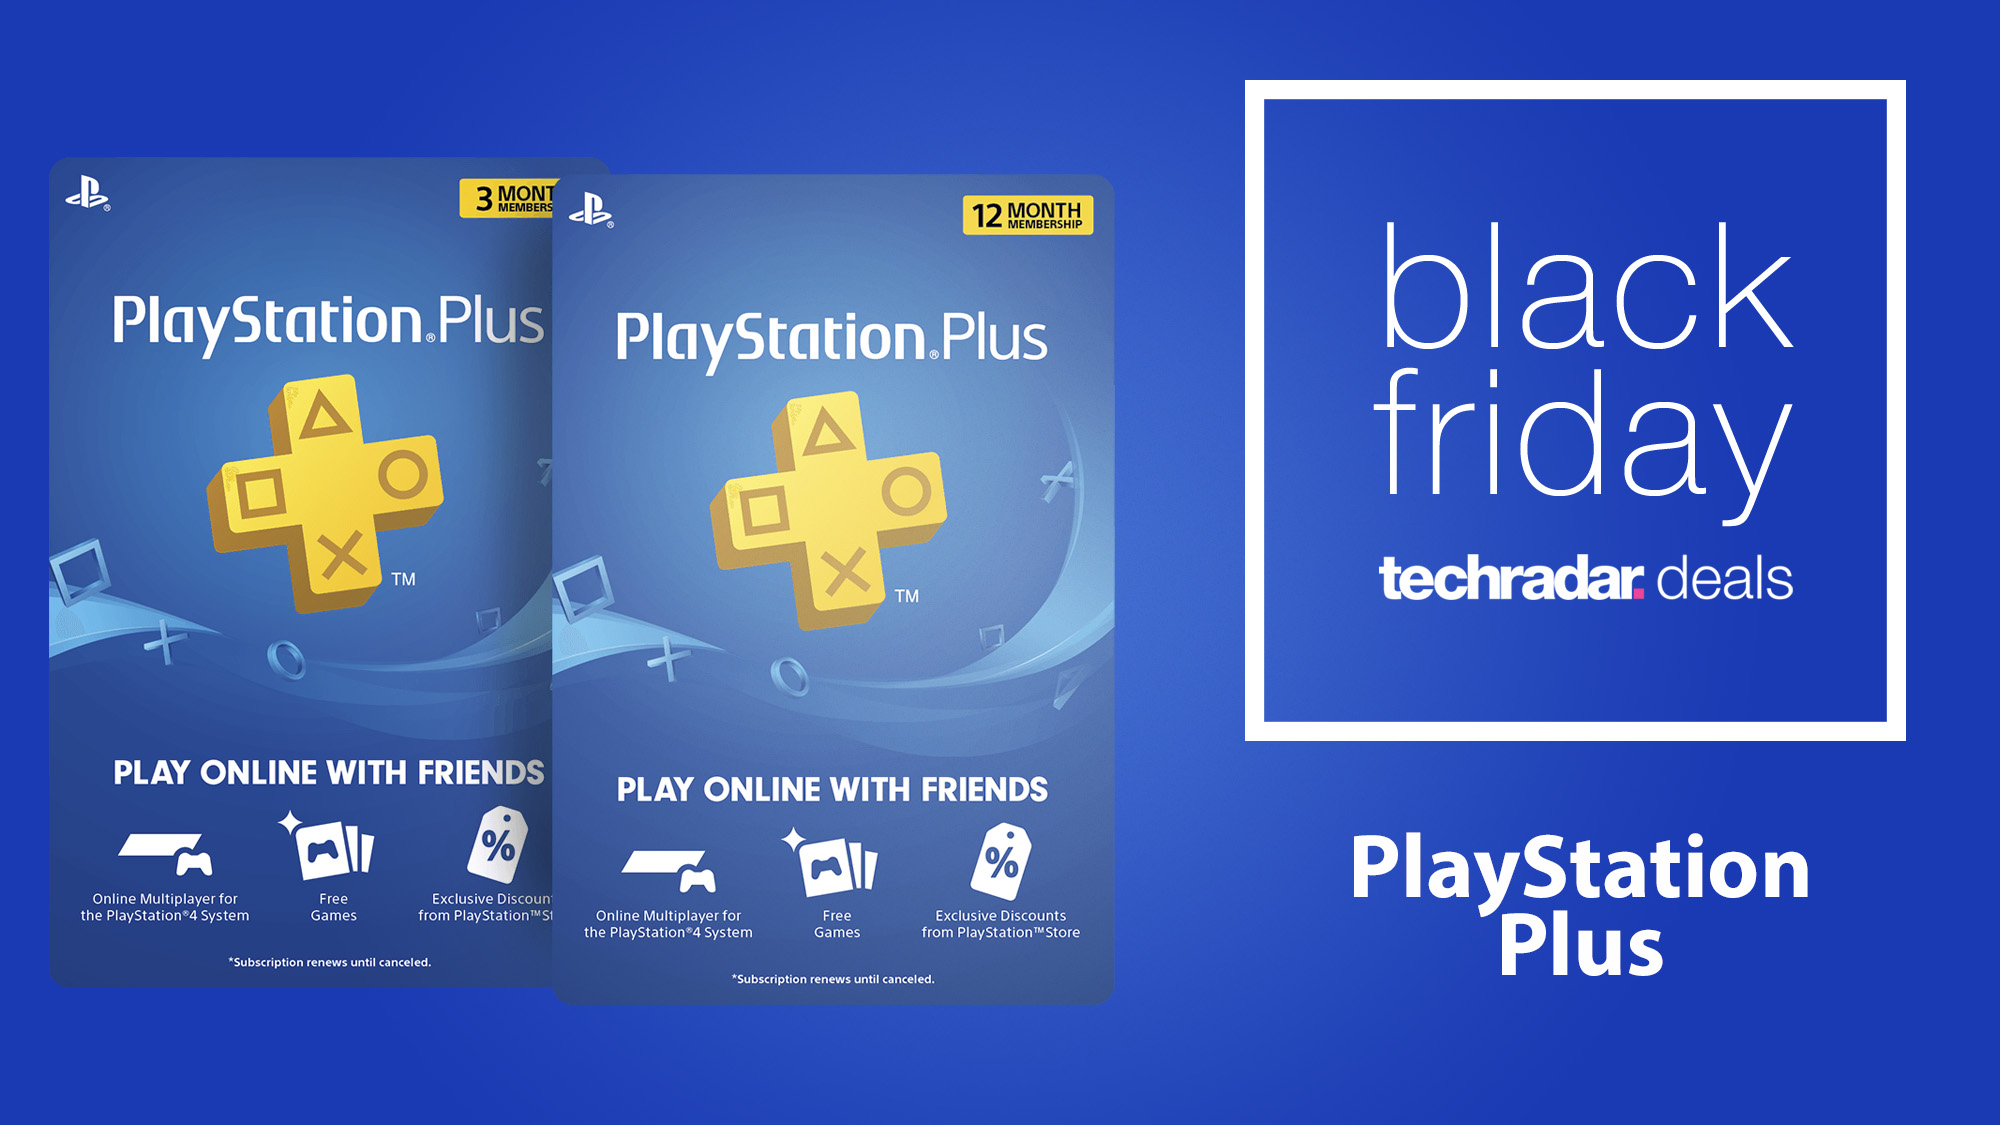 PlayStation Plus Black Friday deals